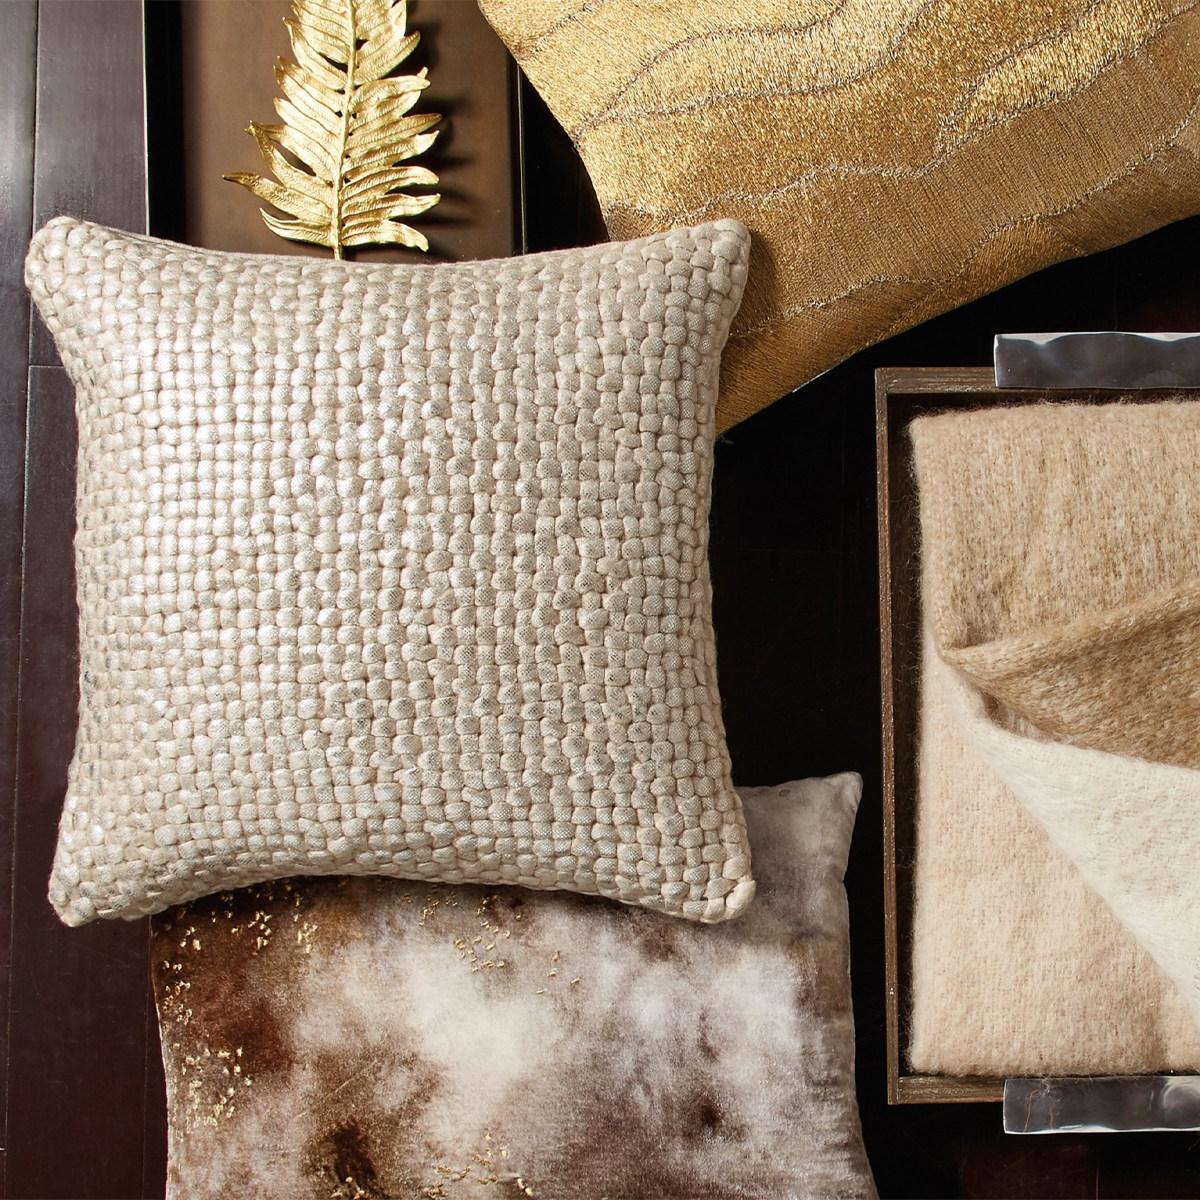 Metallic Knit Decorative Pillow靠垫